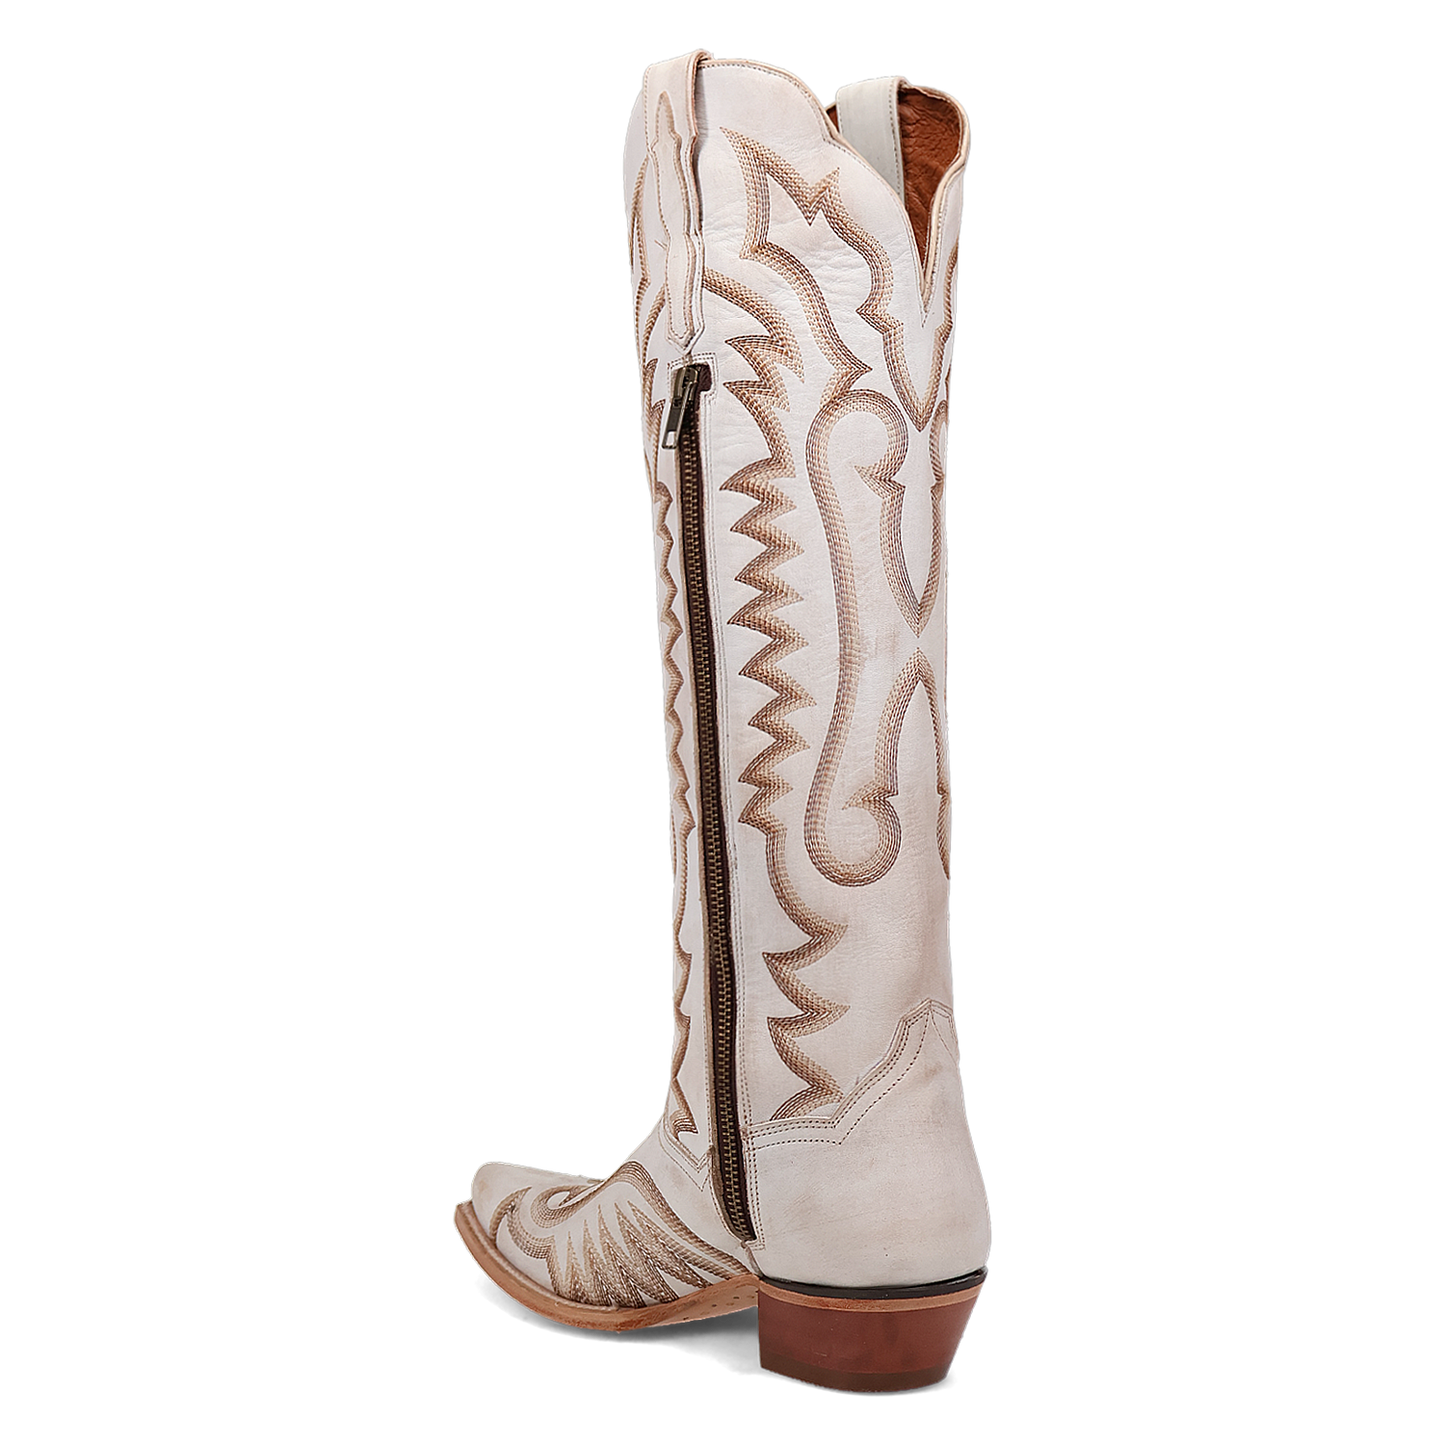 Dan Post Ladies Josie Tall White Leather Boots DP5107